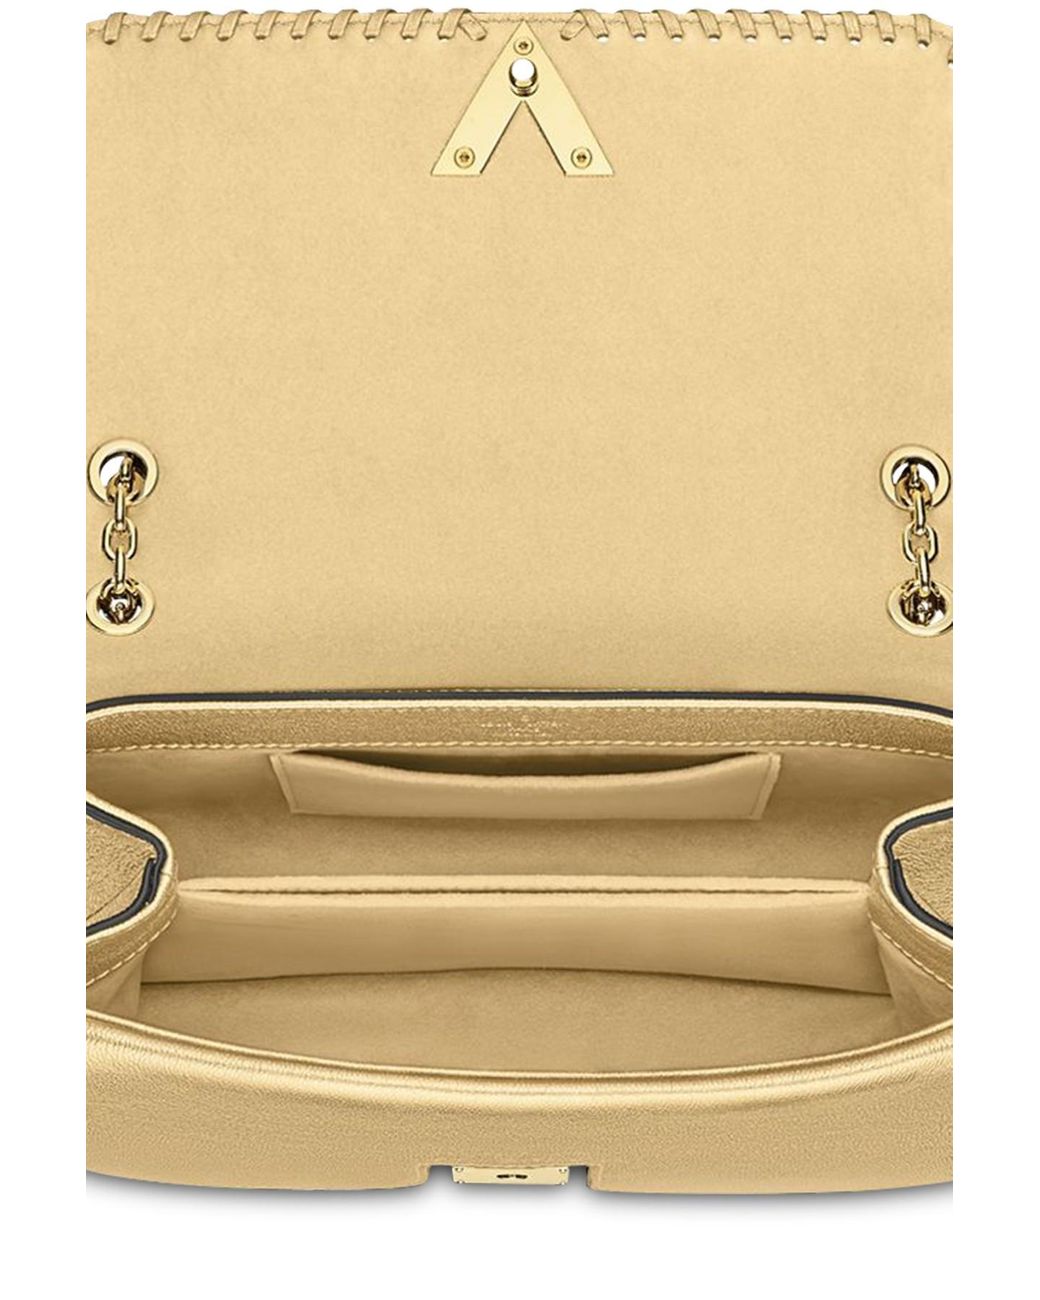 Shop Louis Vuitton MONOGRAM Louis Vuitton VERY CHAIN BAG by